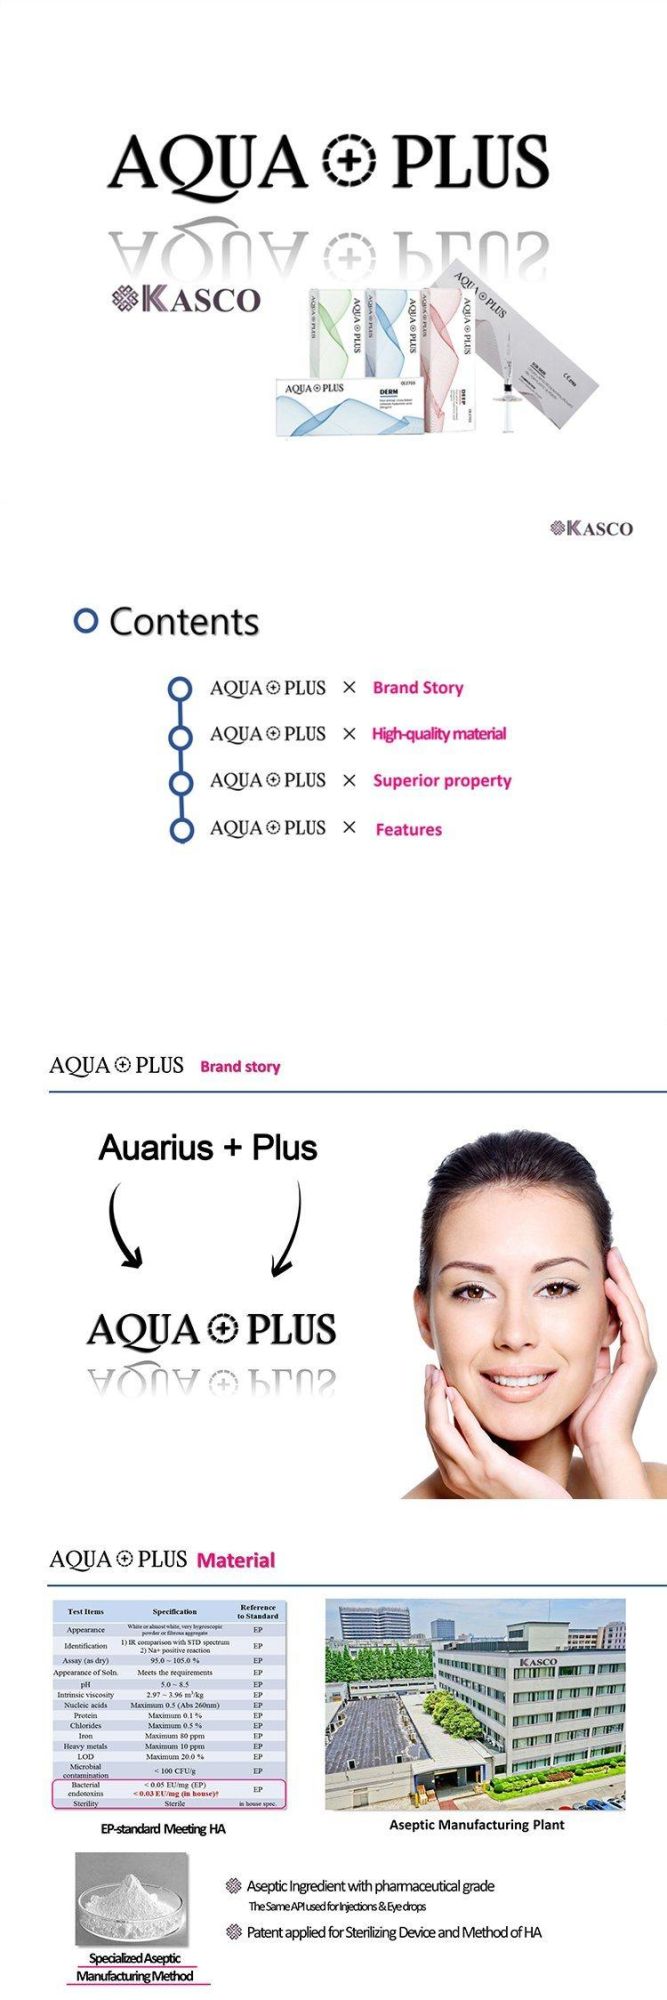 Aqua Plus Beauty Cross Linked Gel Price Filler Hyaluronic Acid Injections to Buy 2ml